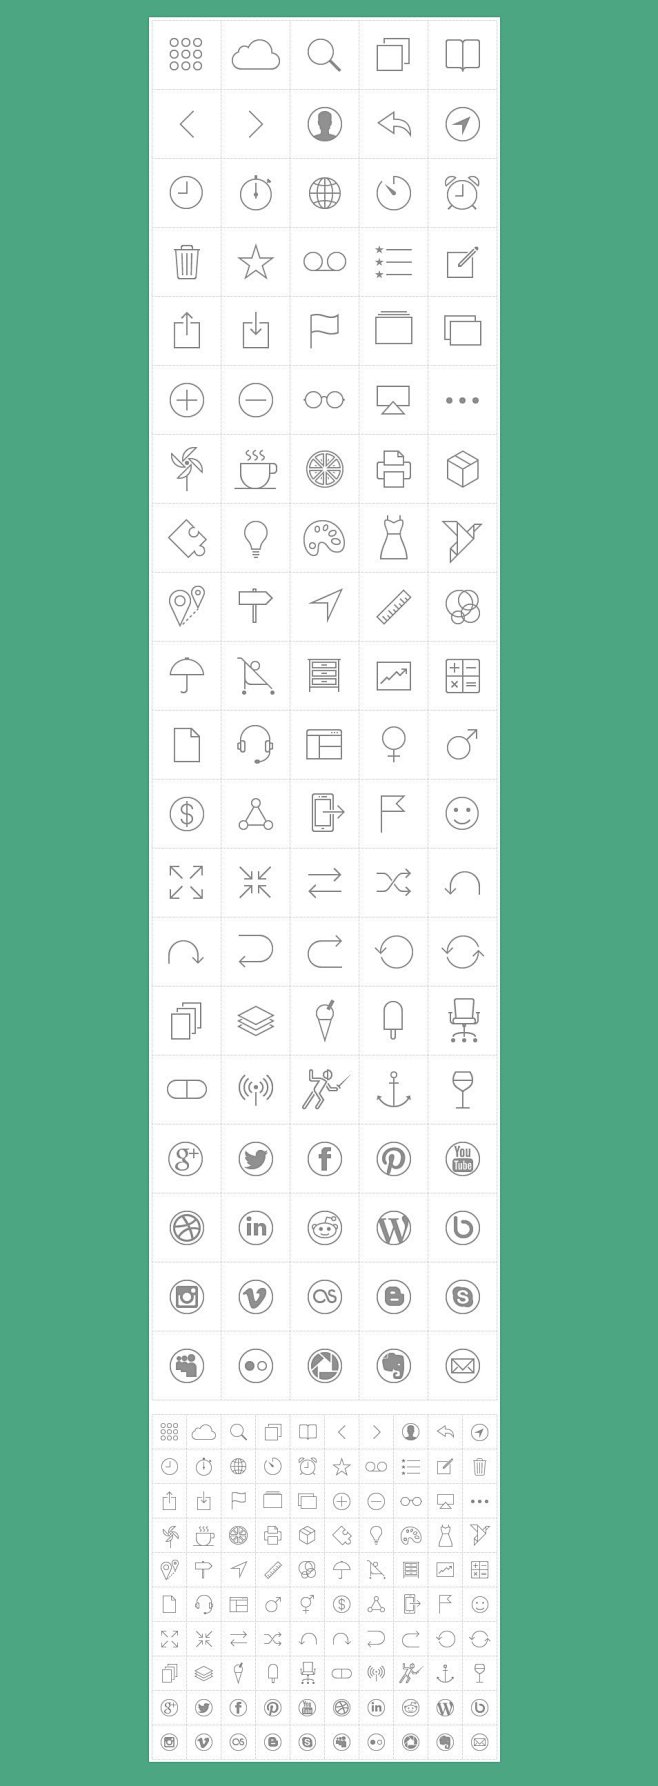 iOS 7 tab bar icons